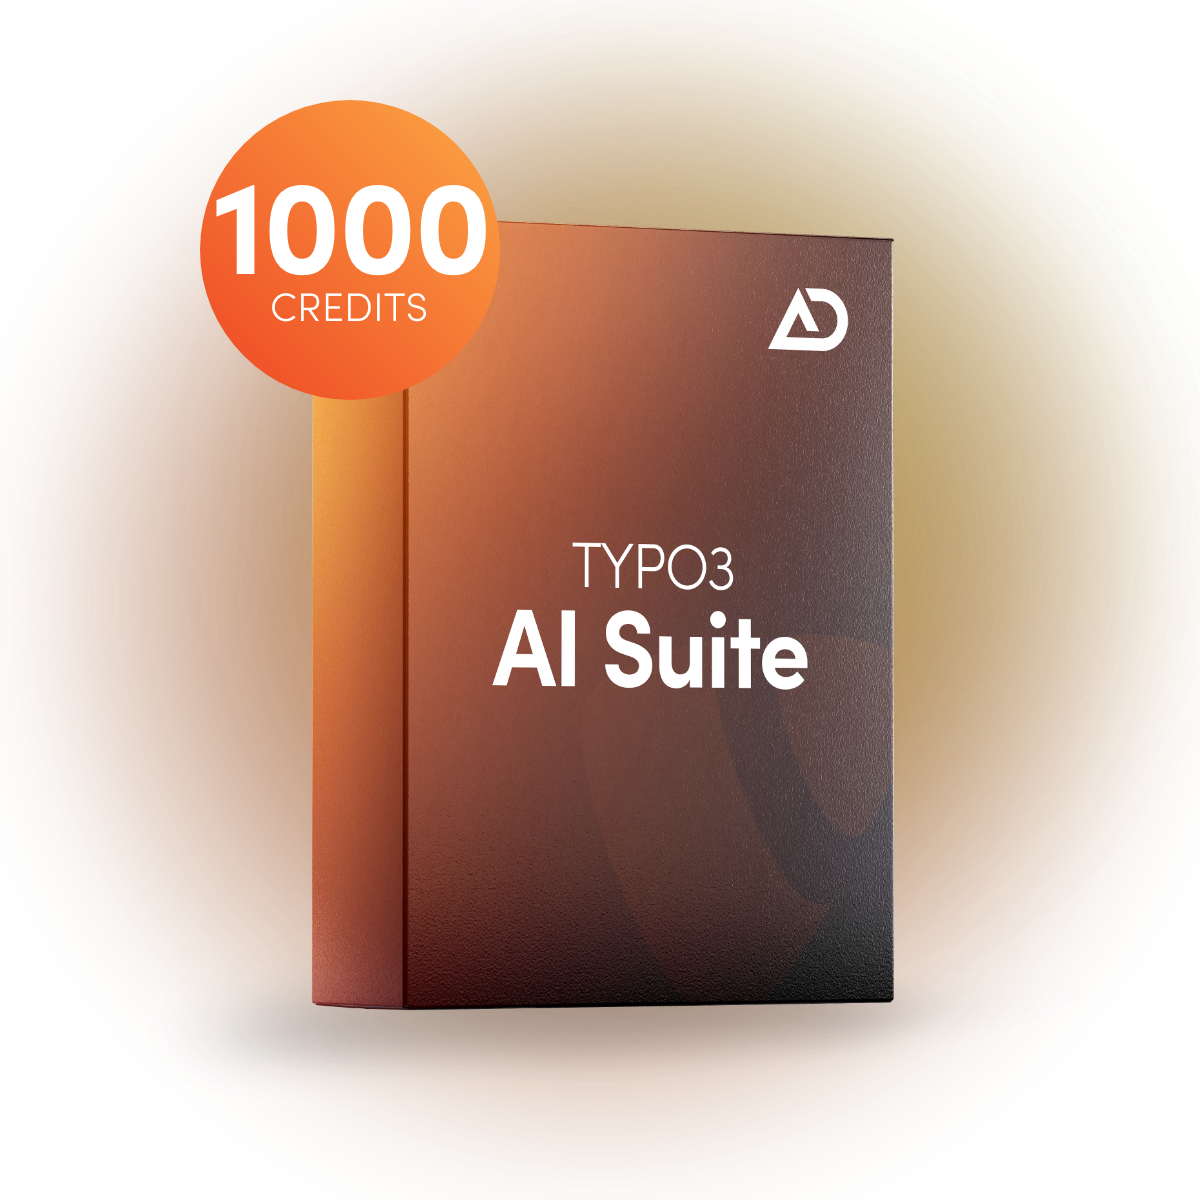 TYPO3 AI-Suite 1000 Credits